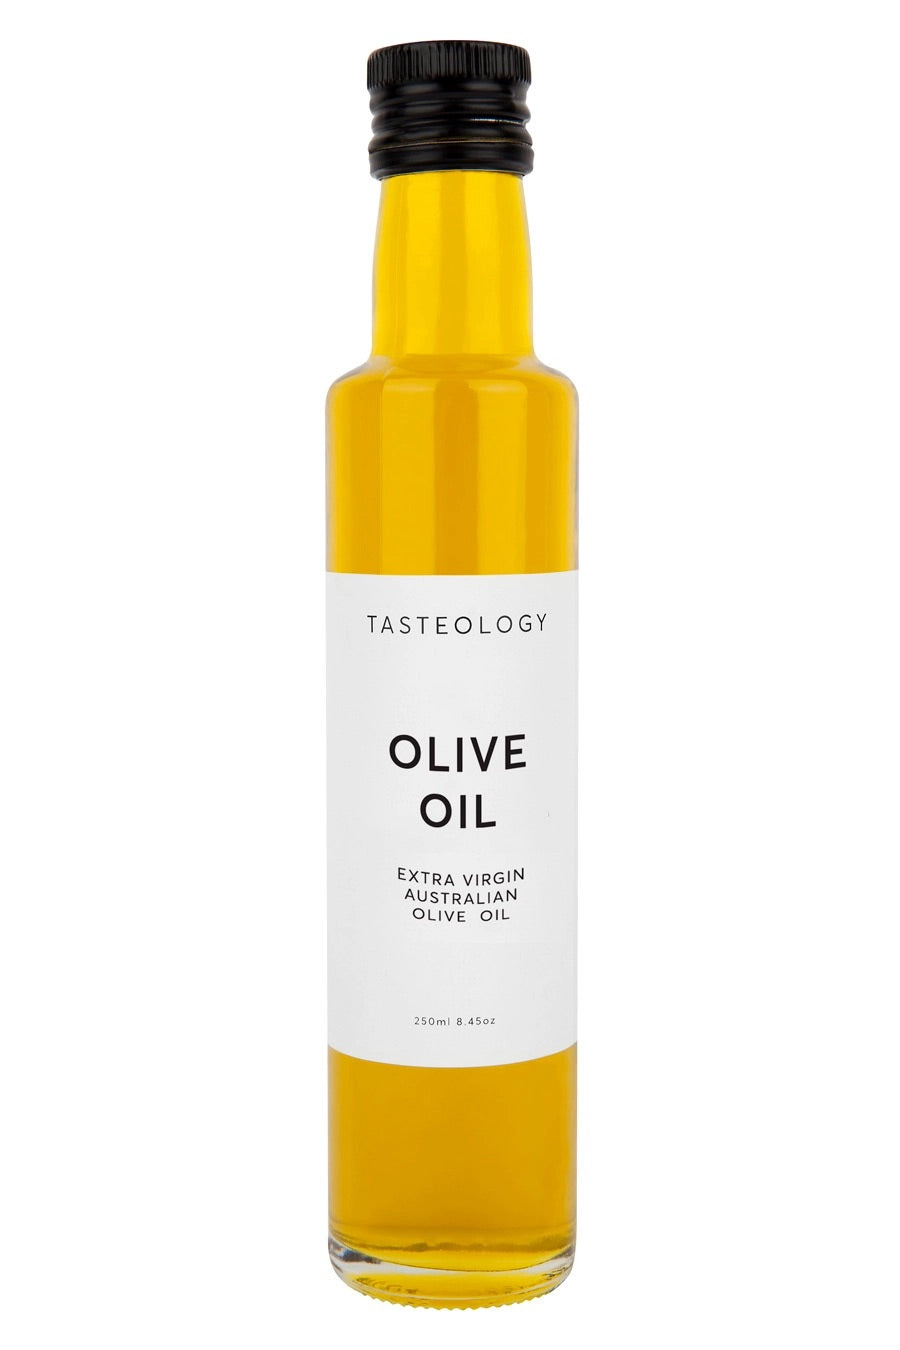 Tasteology extra virgin olive oil